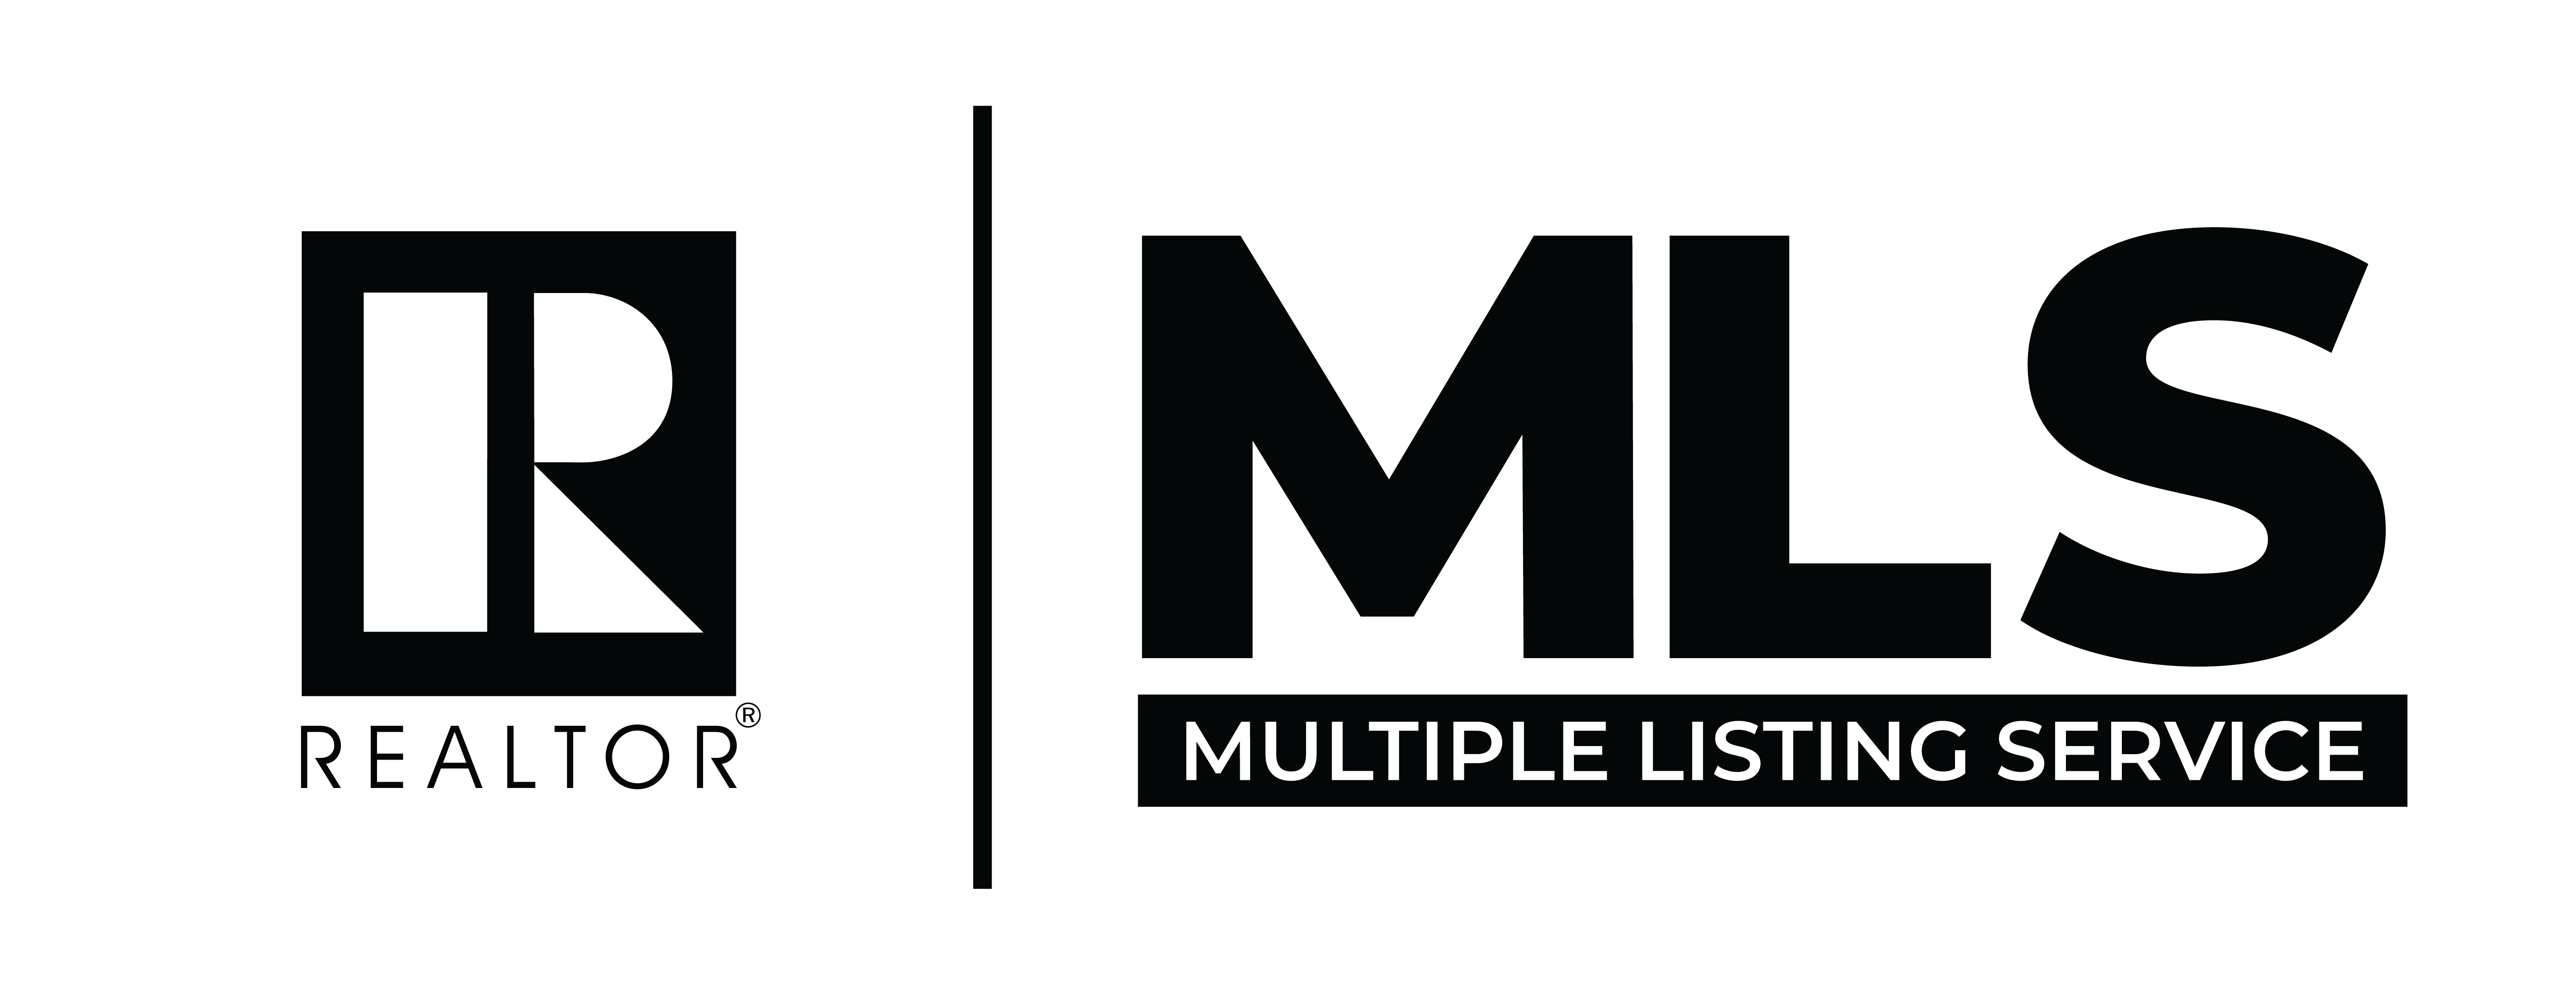 Multiple Listing Service Realtor Logo